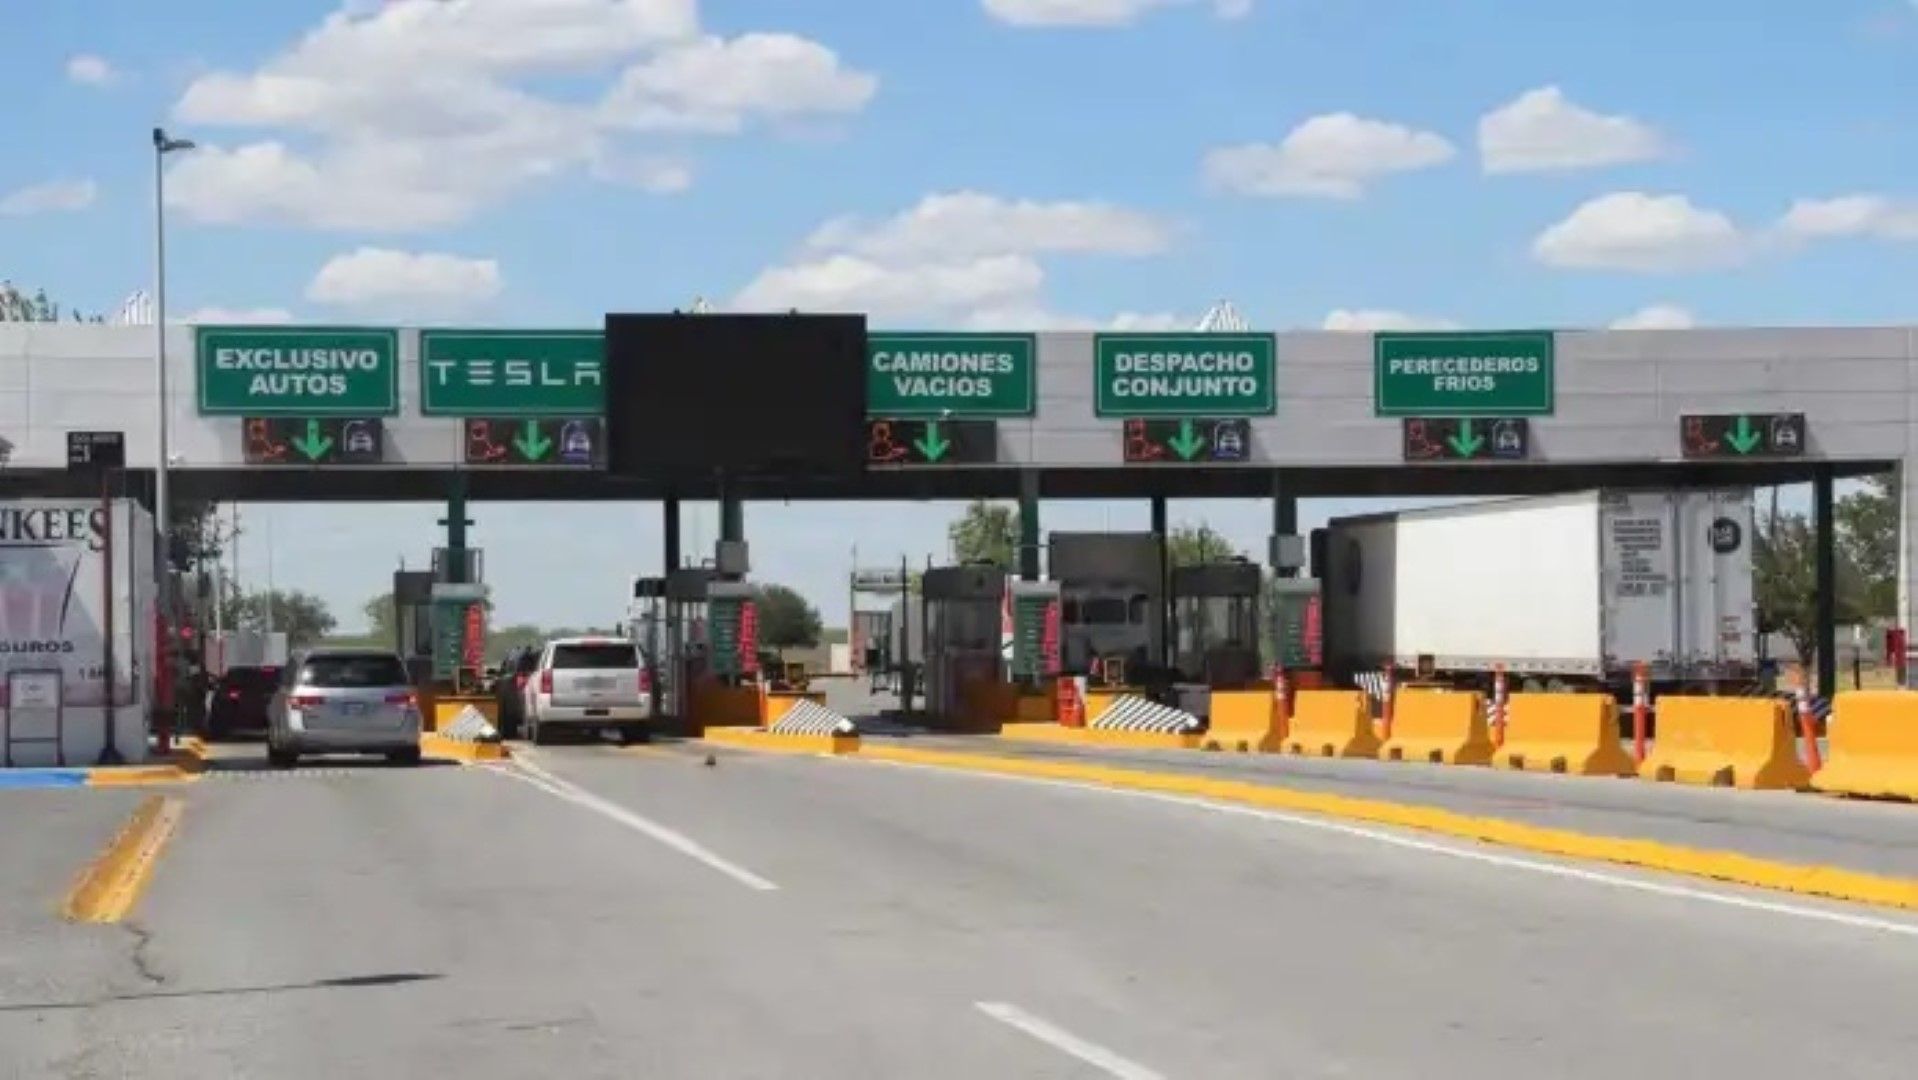 H Tesla έχει «δρόμο» στο Μεξικό μόνο… για πάρτη της!